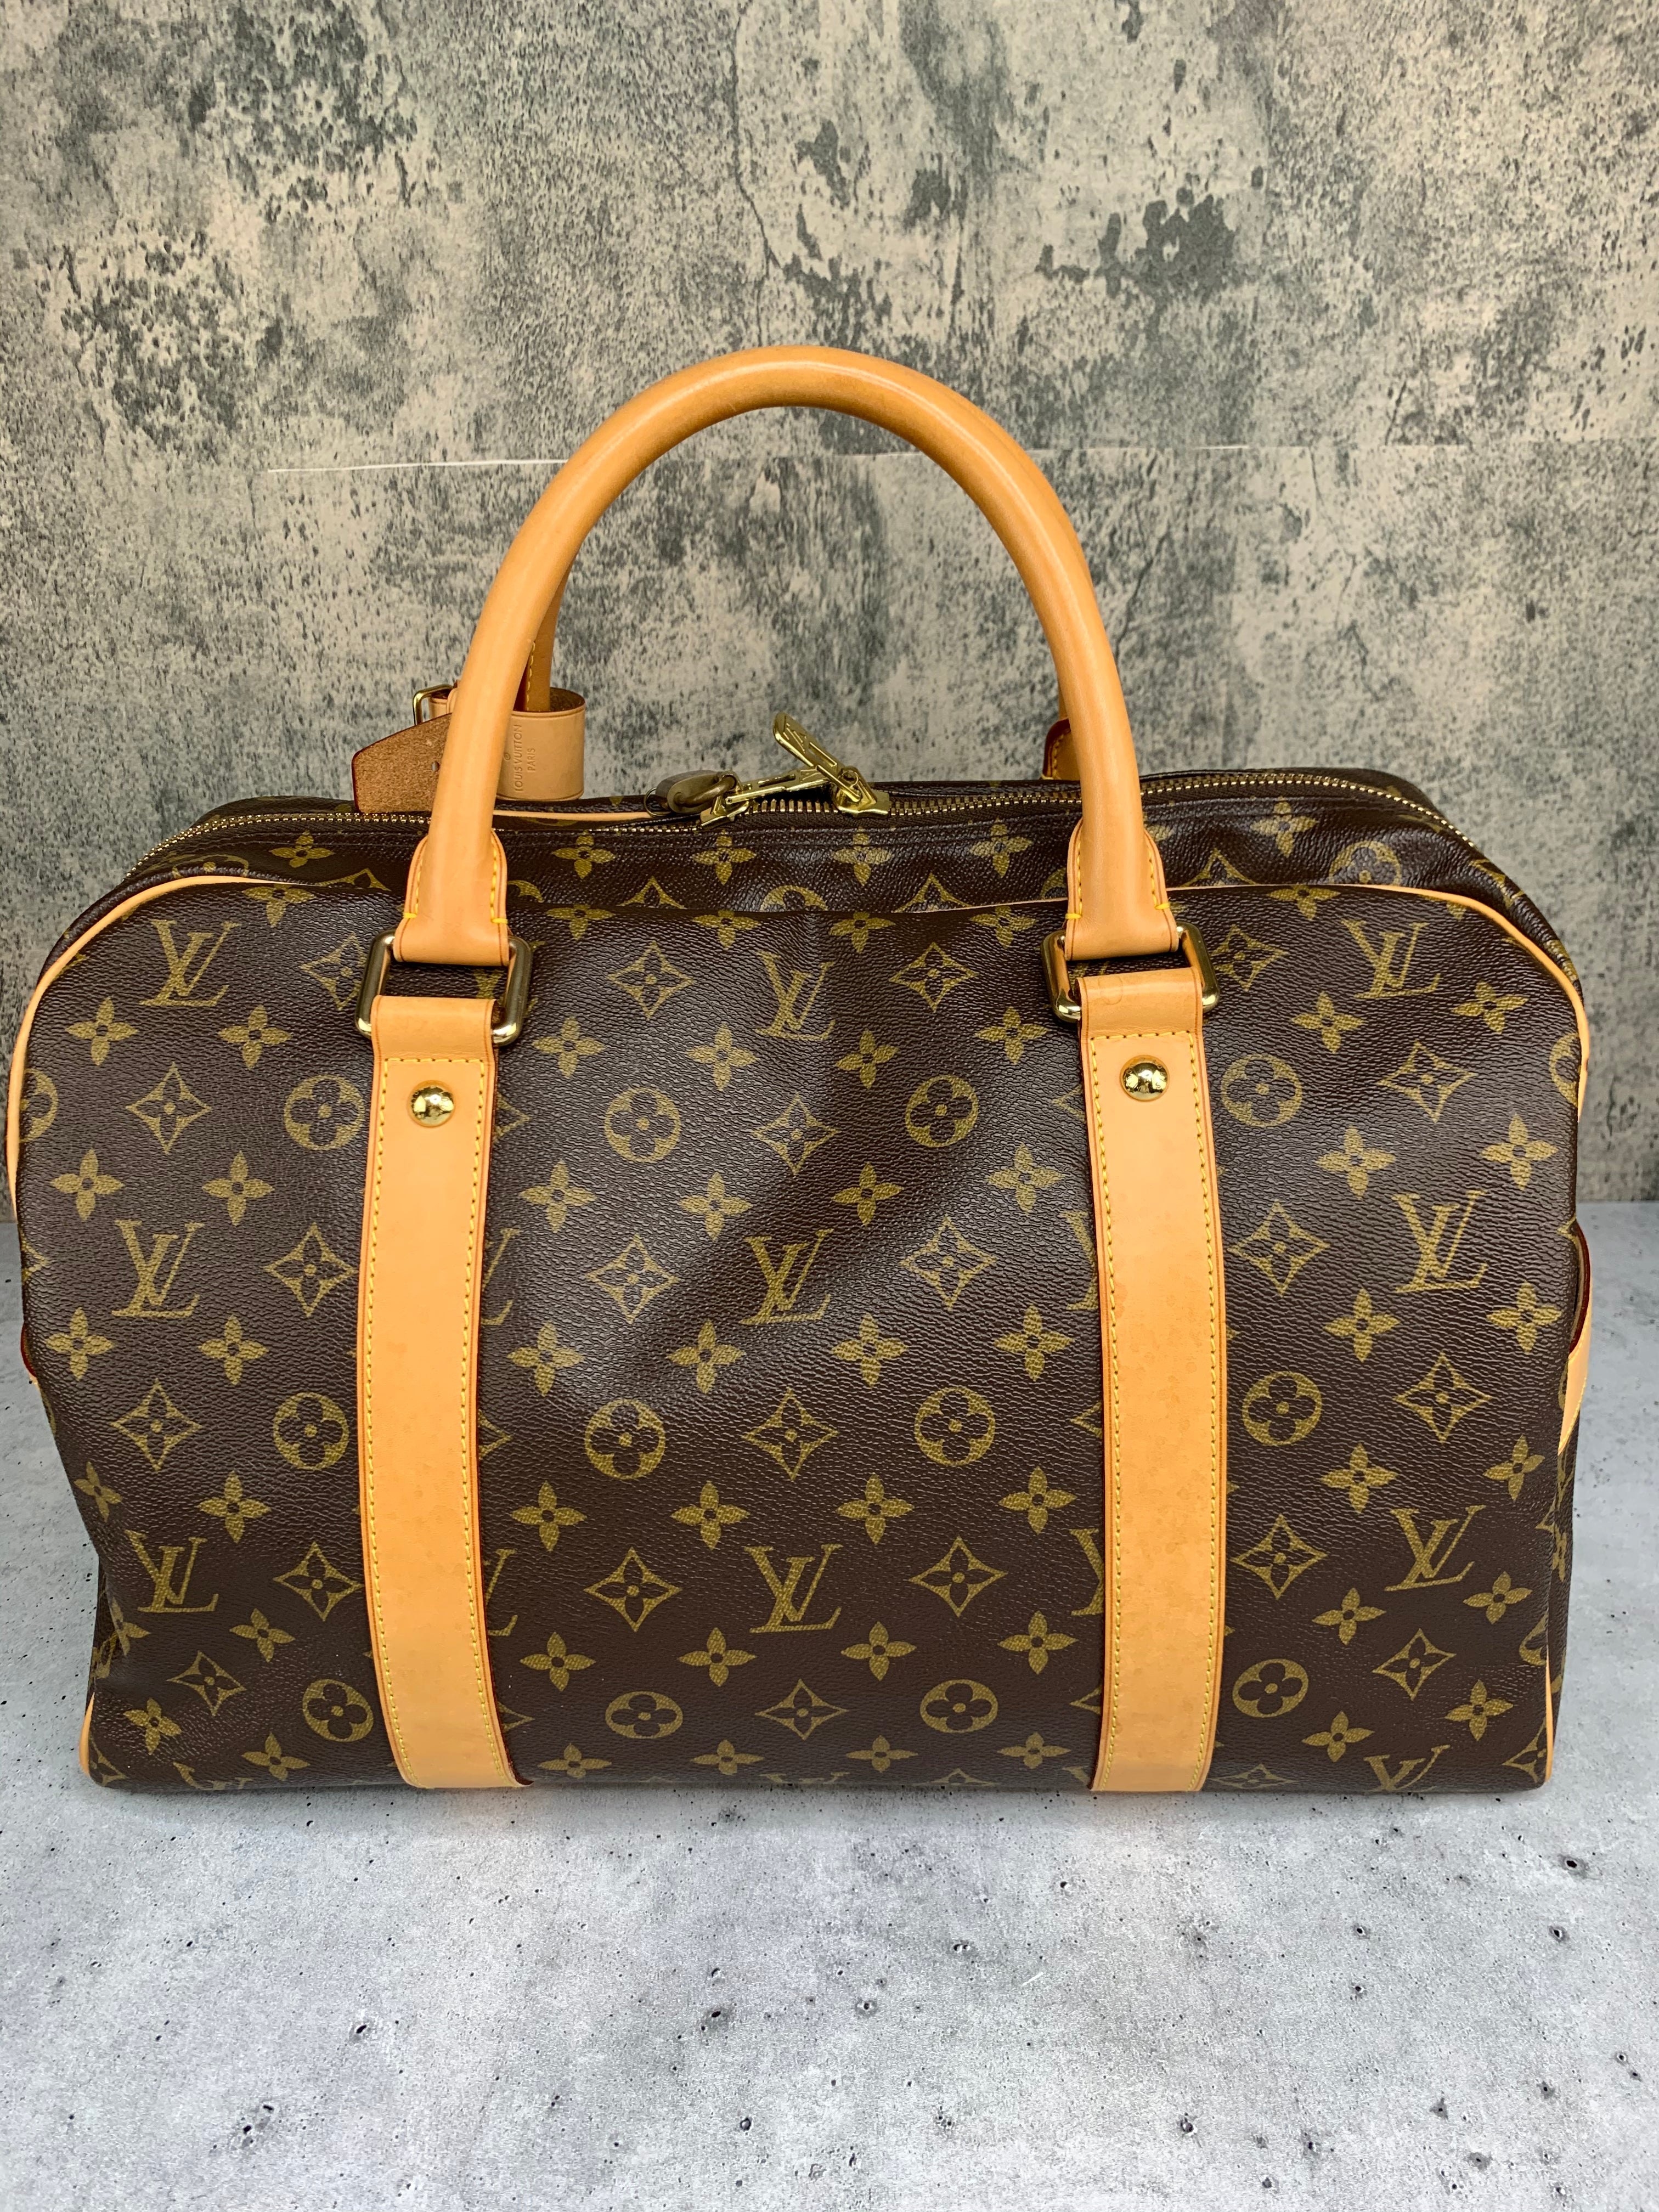 Favorite travel bag? Galliera GM : r/Louisvuitton